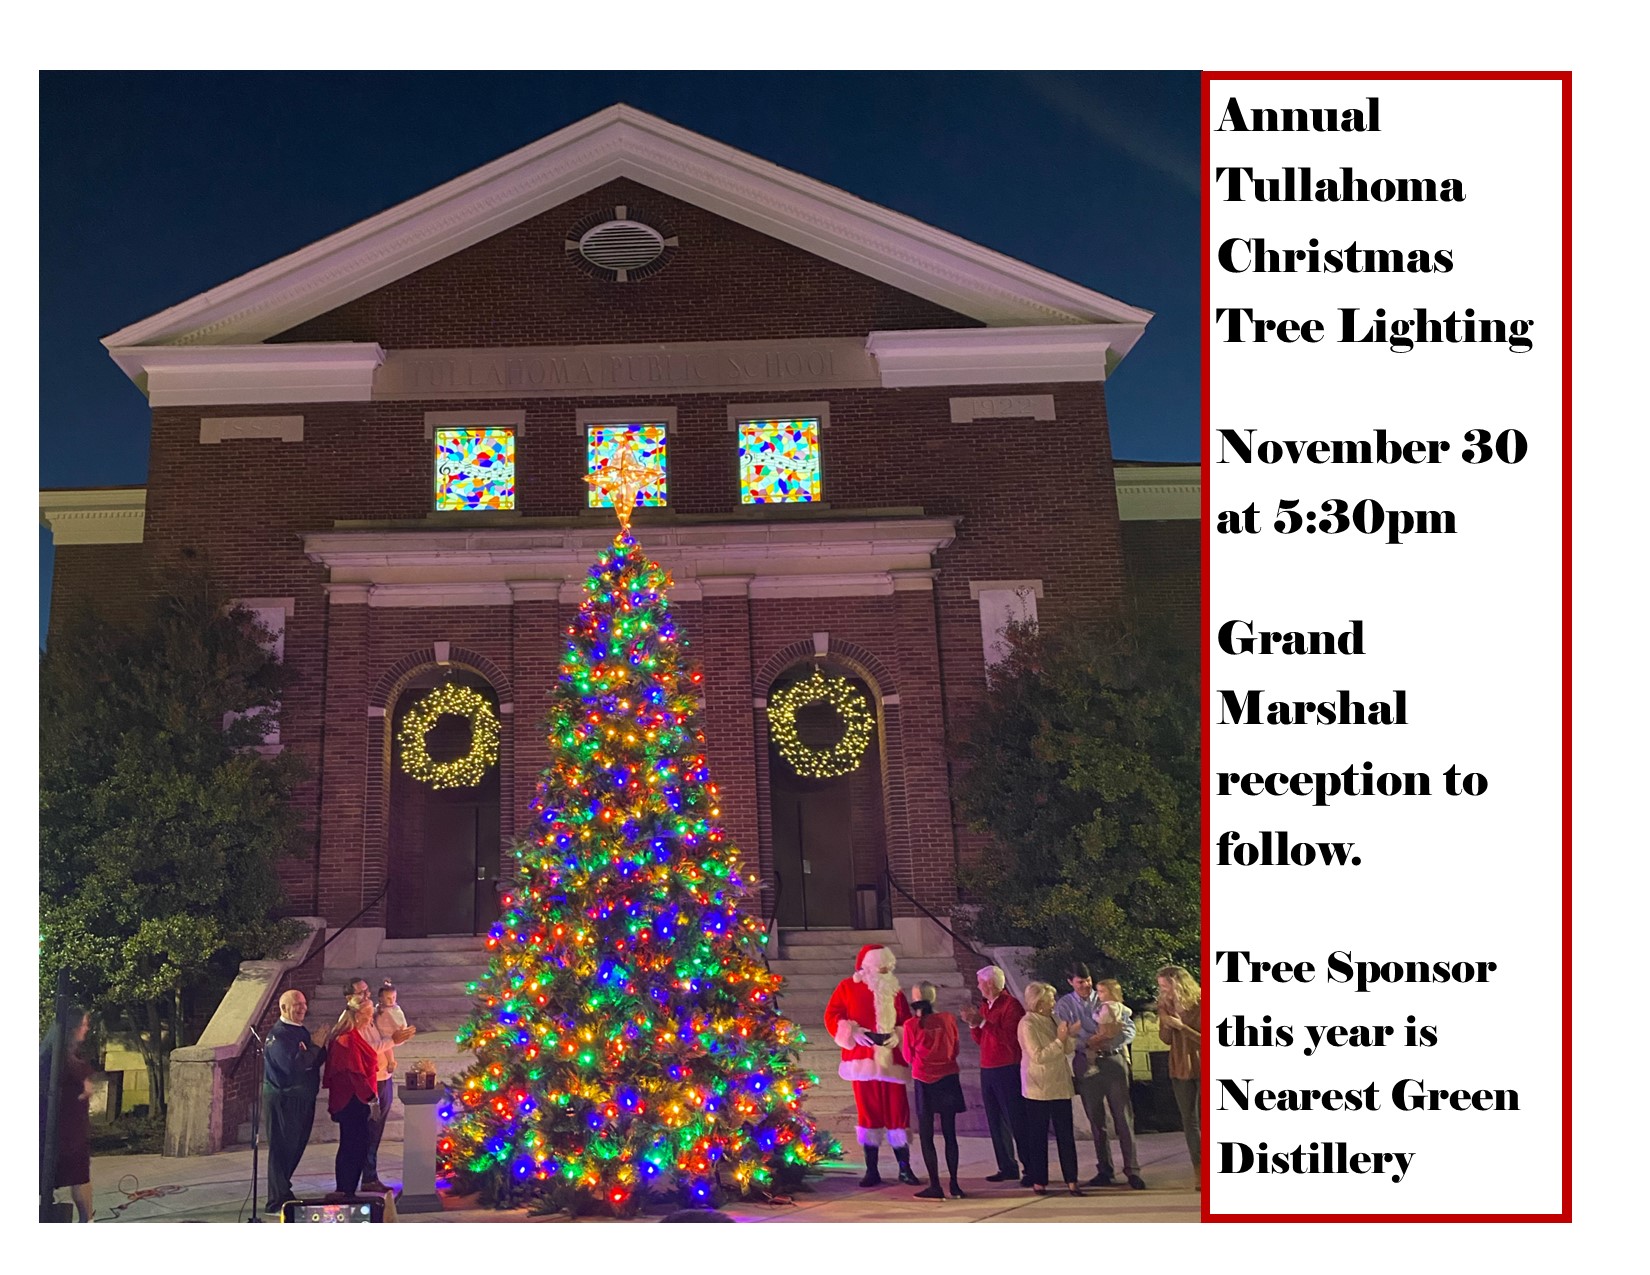 Christmas Tree Lighting & Grand Marshal Reception Promo Image